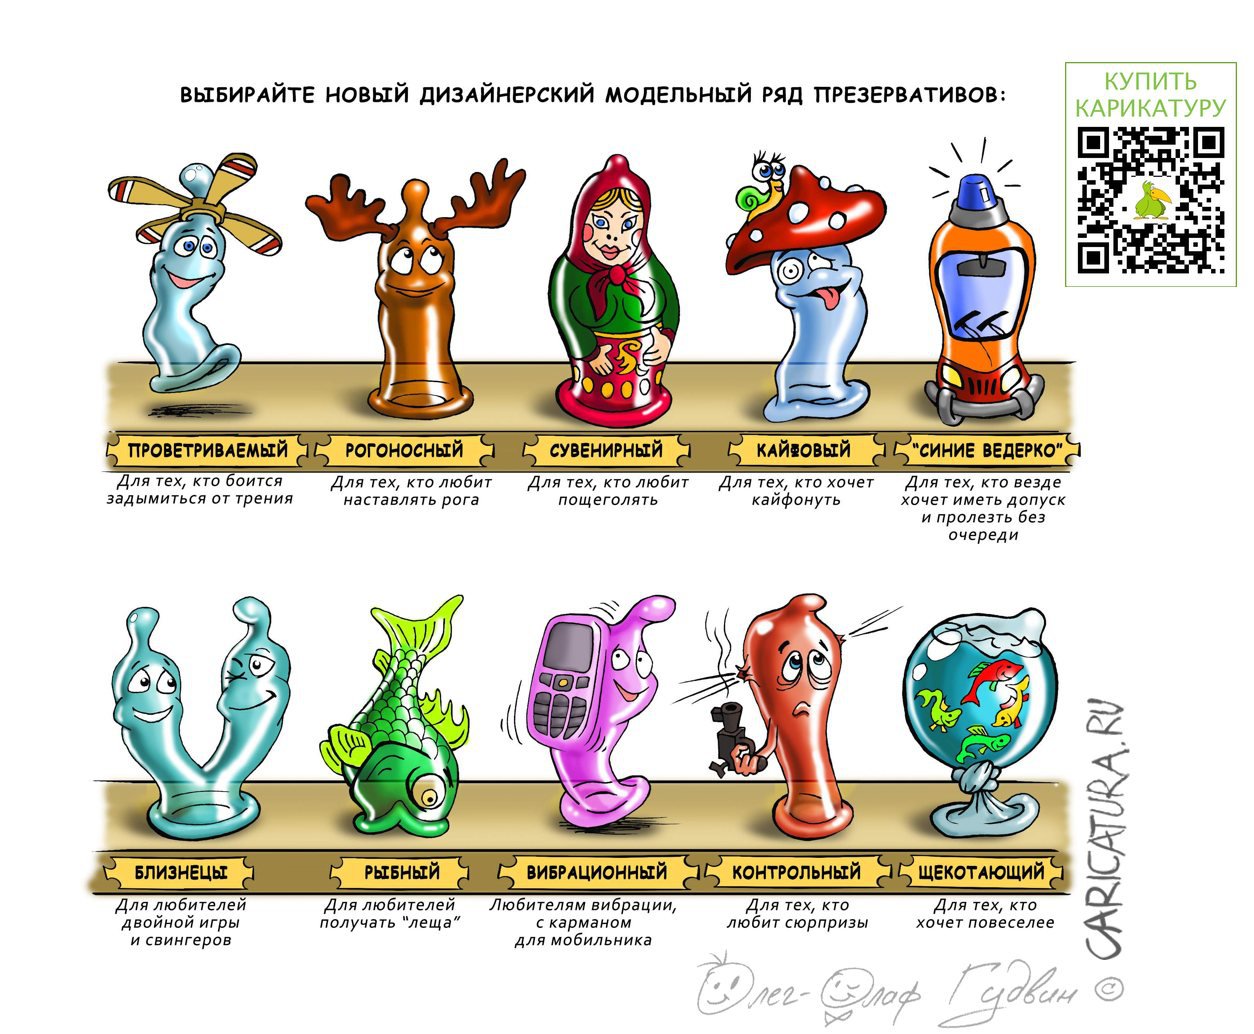 Карикатура "Хороший модельный ряд презервативов", Олег-Олаф Гудвин